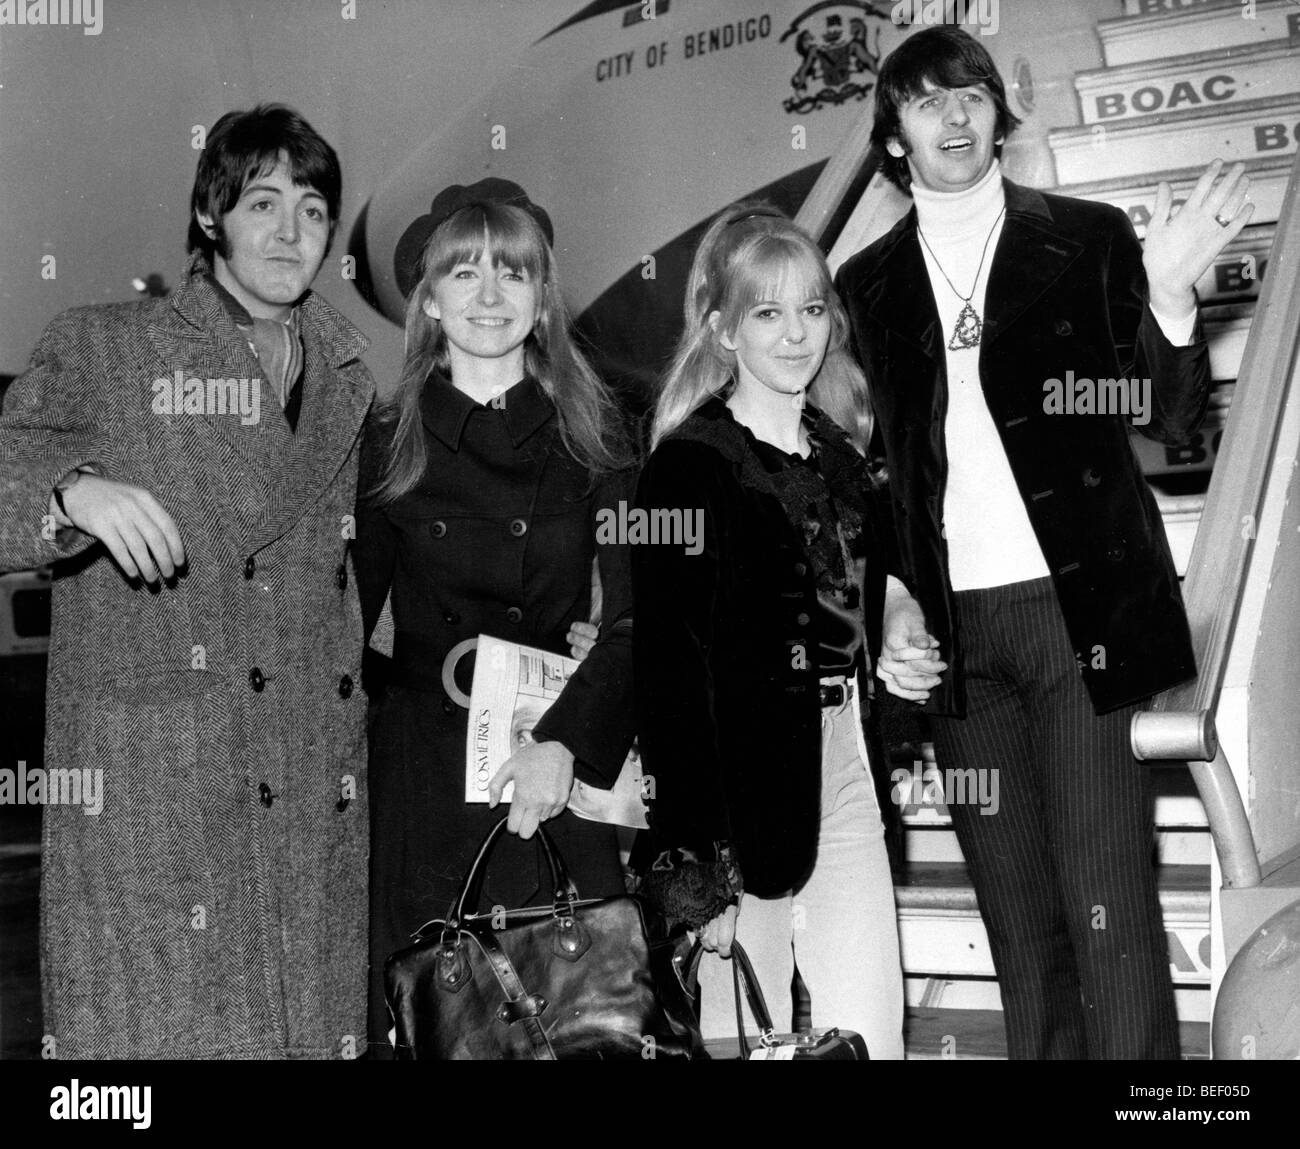 Die Beatles links, Paul McCartney und Ringo Starr, rechts, an Bord eines BOAC Fluges. Stockfoto